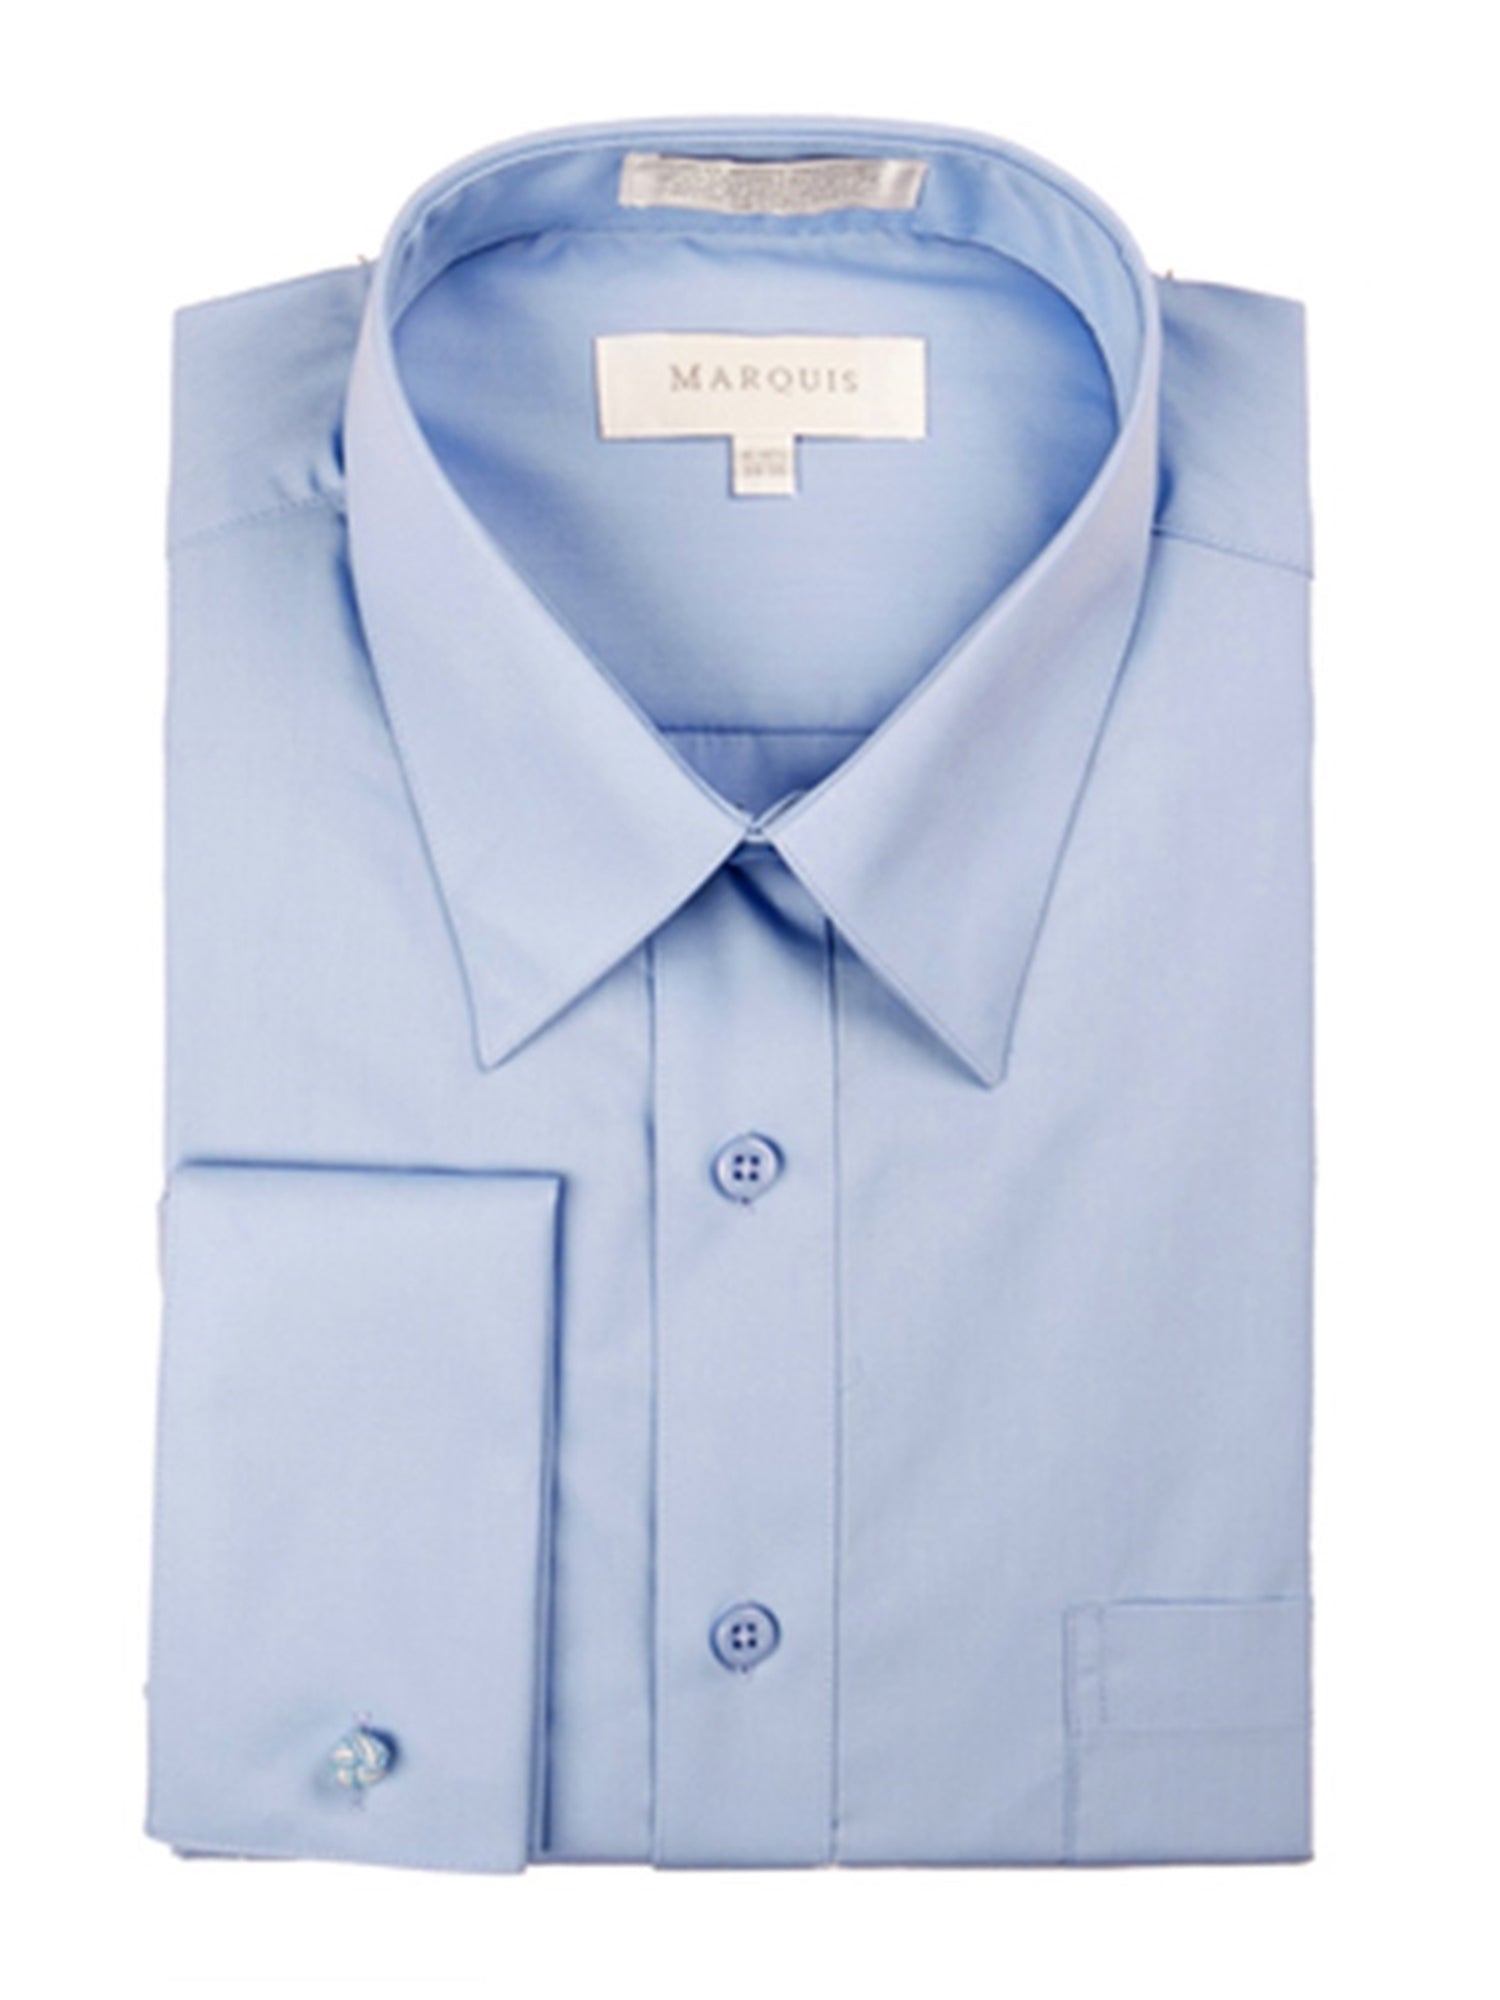 Marquis Men's Slim Fit French Cuff Dress Shirt - Cufflinks Included French Cuff Dress Shirt Marquis Light  Blue 14.5 Neck 32/33 Sleeve 